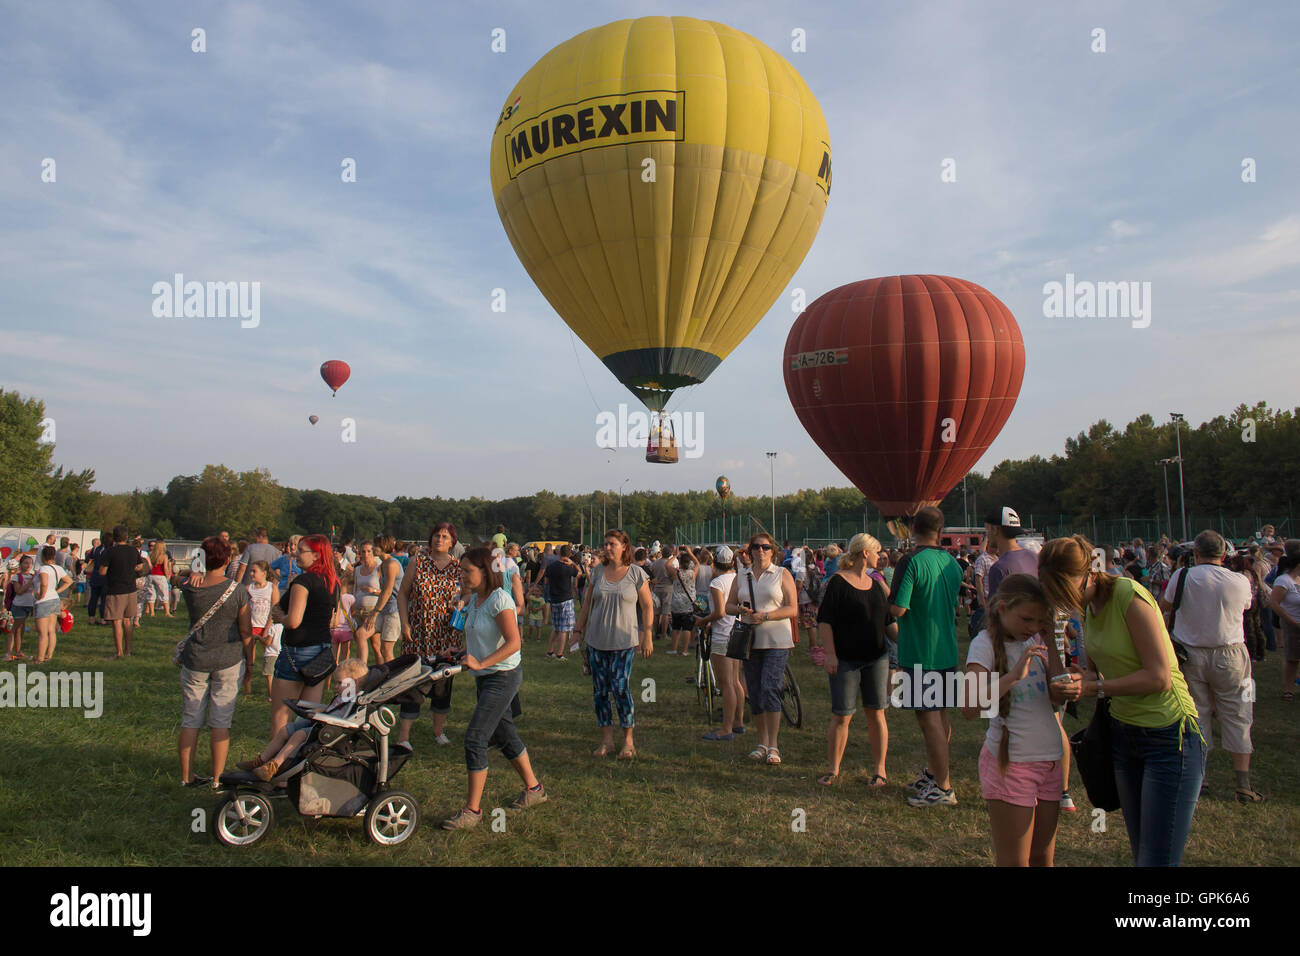 Agard, Hungary. 3rd Sep, 2016. People visit the 22nd Lake Velence International Hot Air Balloon Carnival in Agard, Fejer, Hungary, Sept. 3, 2016. © Attila Volgy/Xinhua/Alamy Live News Stock Photo